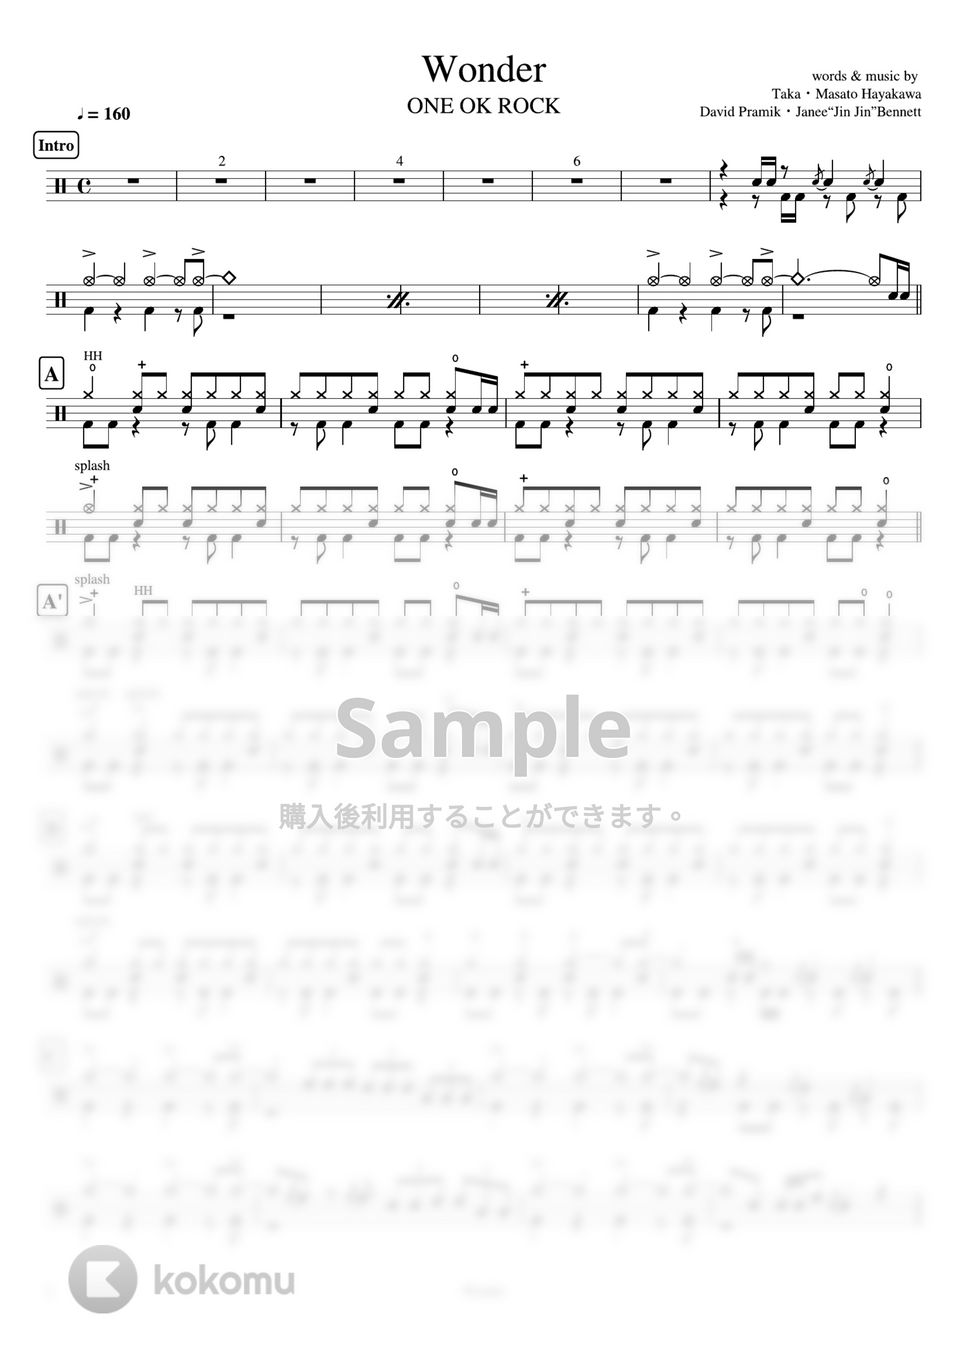 ONE OK ROCK - Wonder by ドラムが好き！